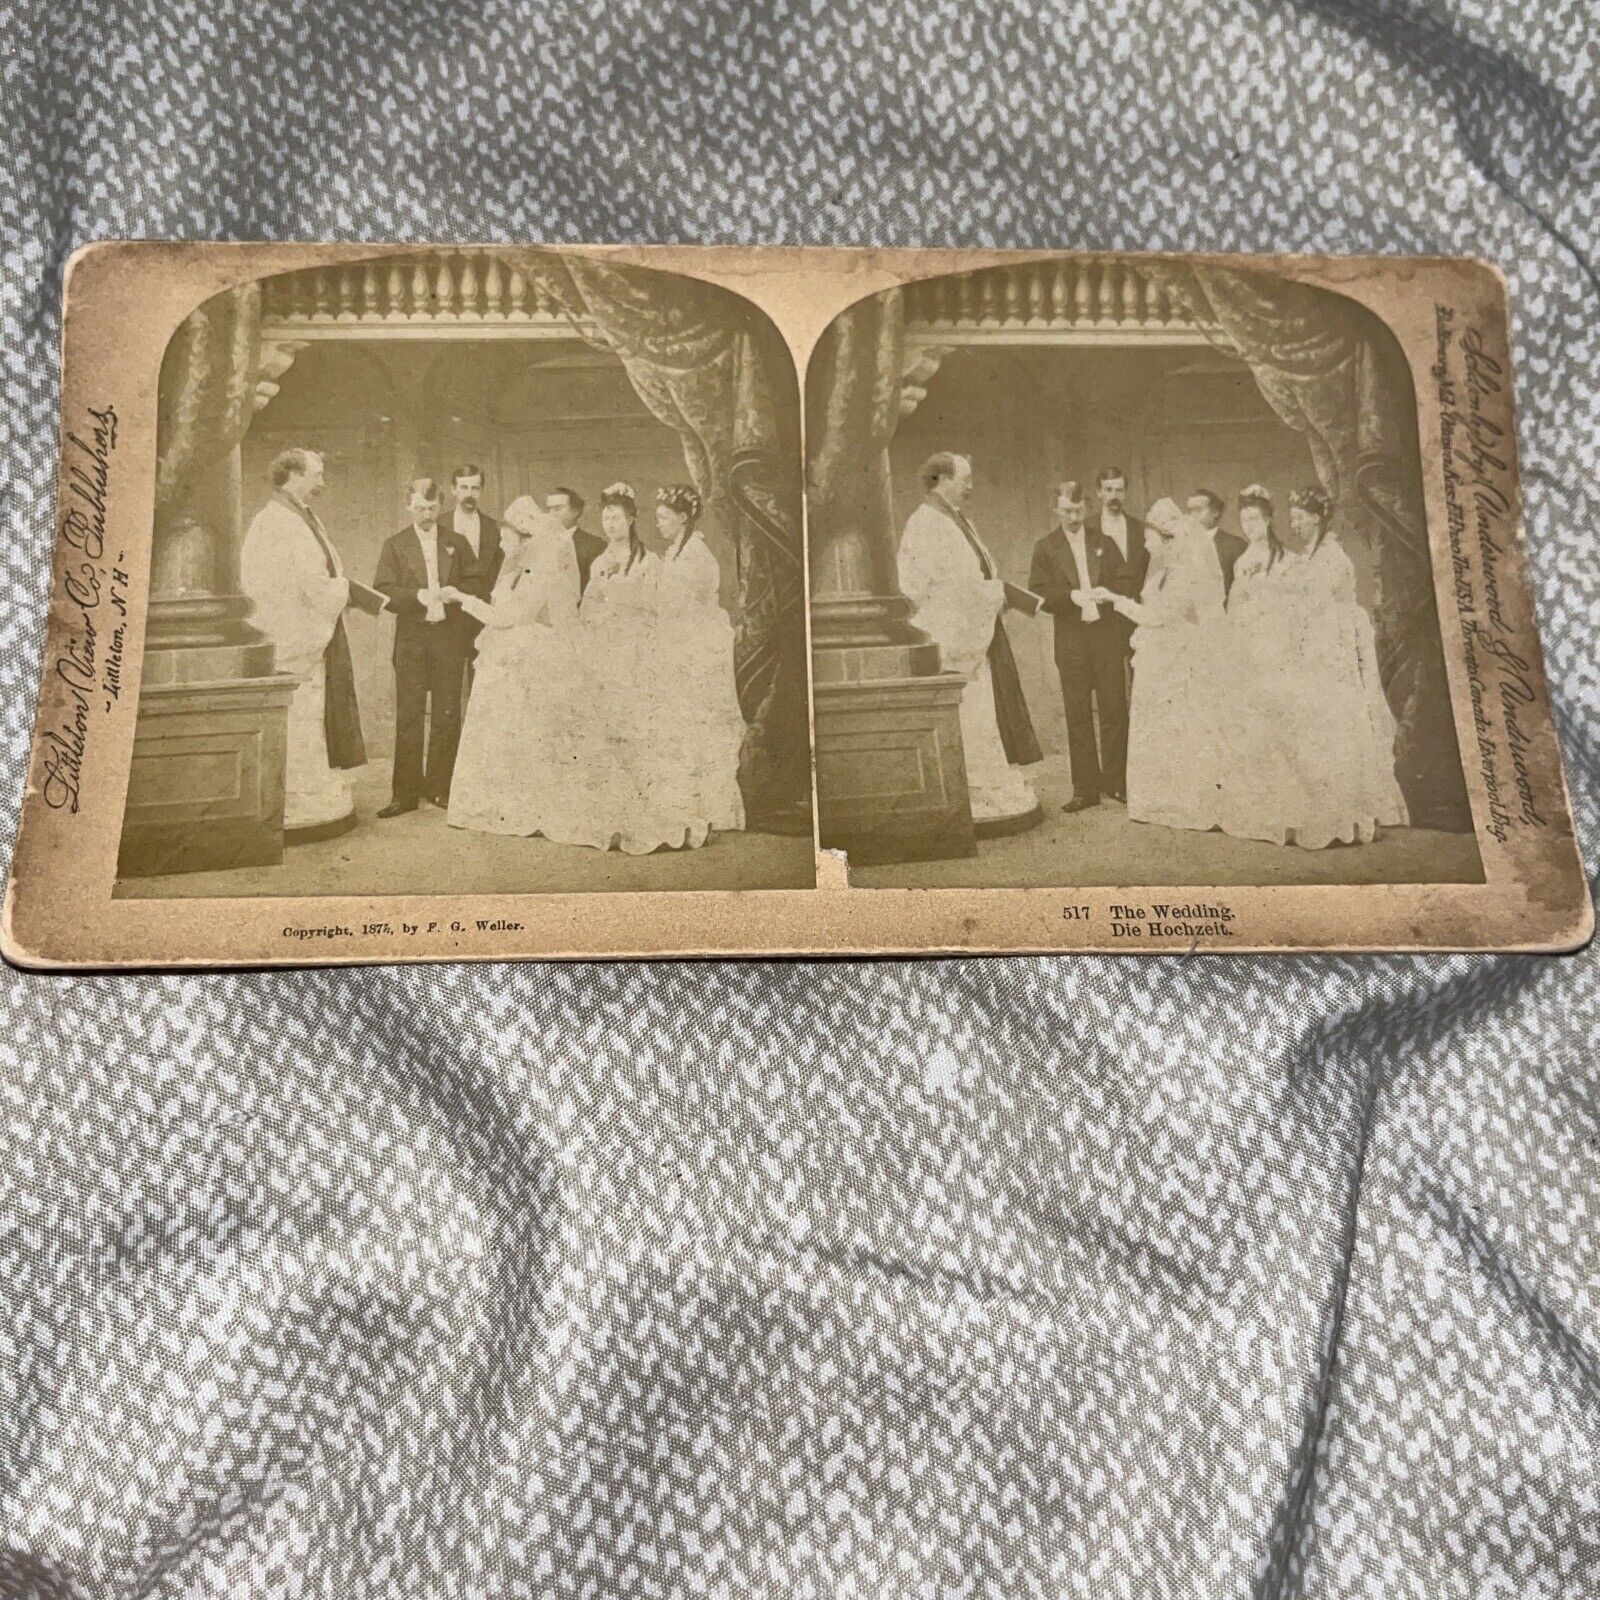 Antique 1875 Stereoview Card Photo Die Hochzeit Related to Richard Wagner Opera?